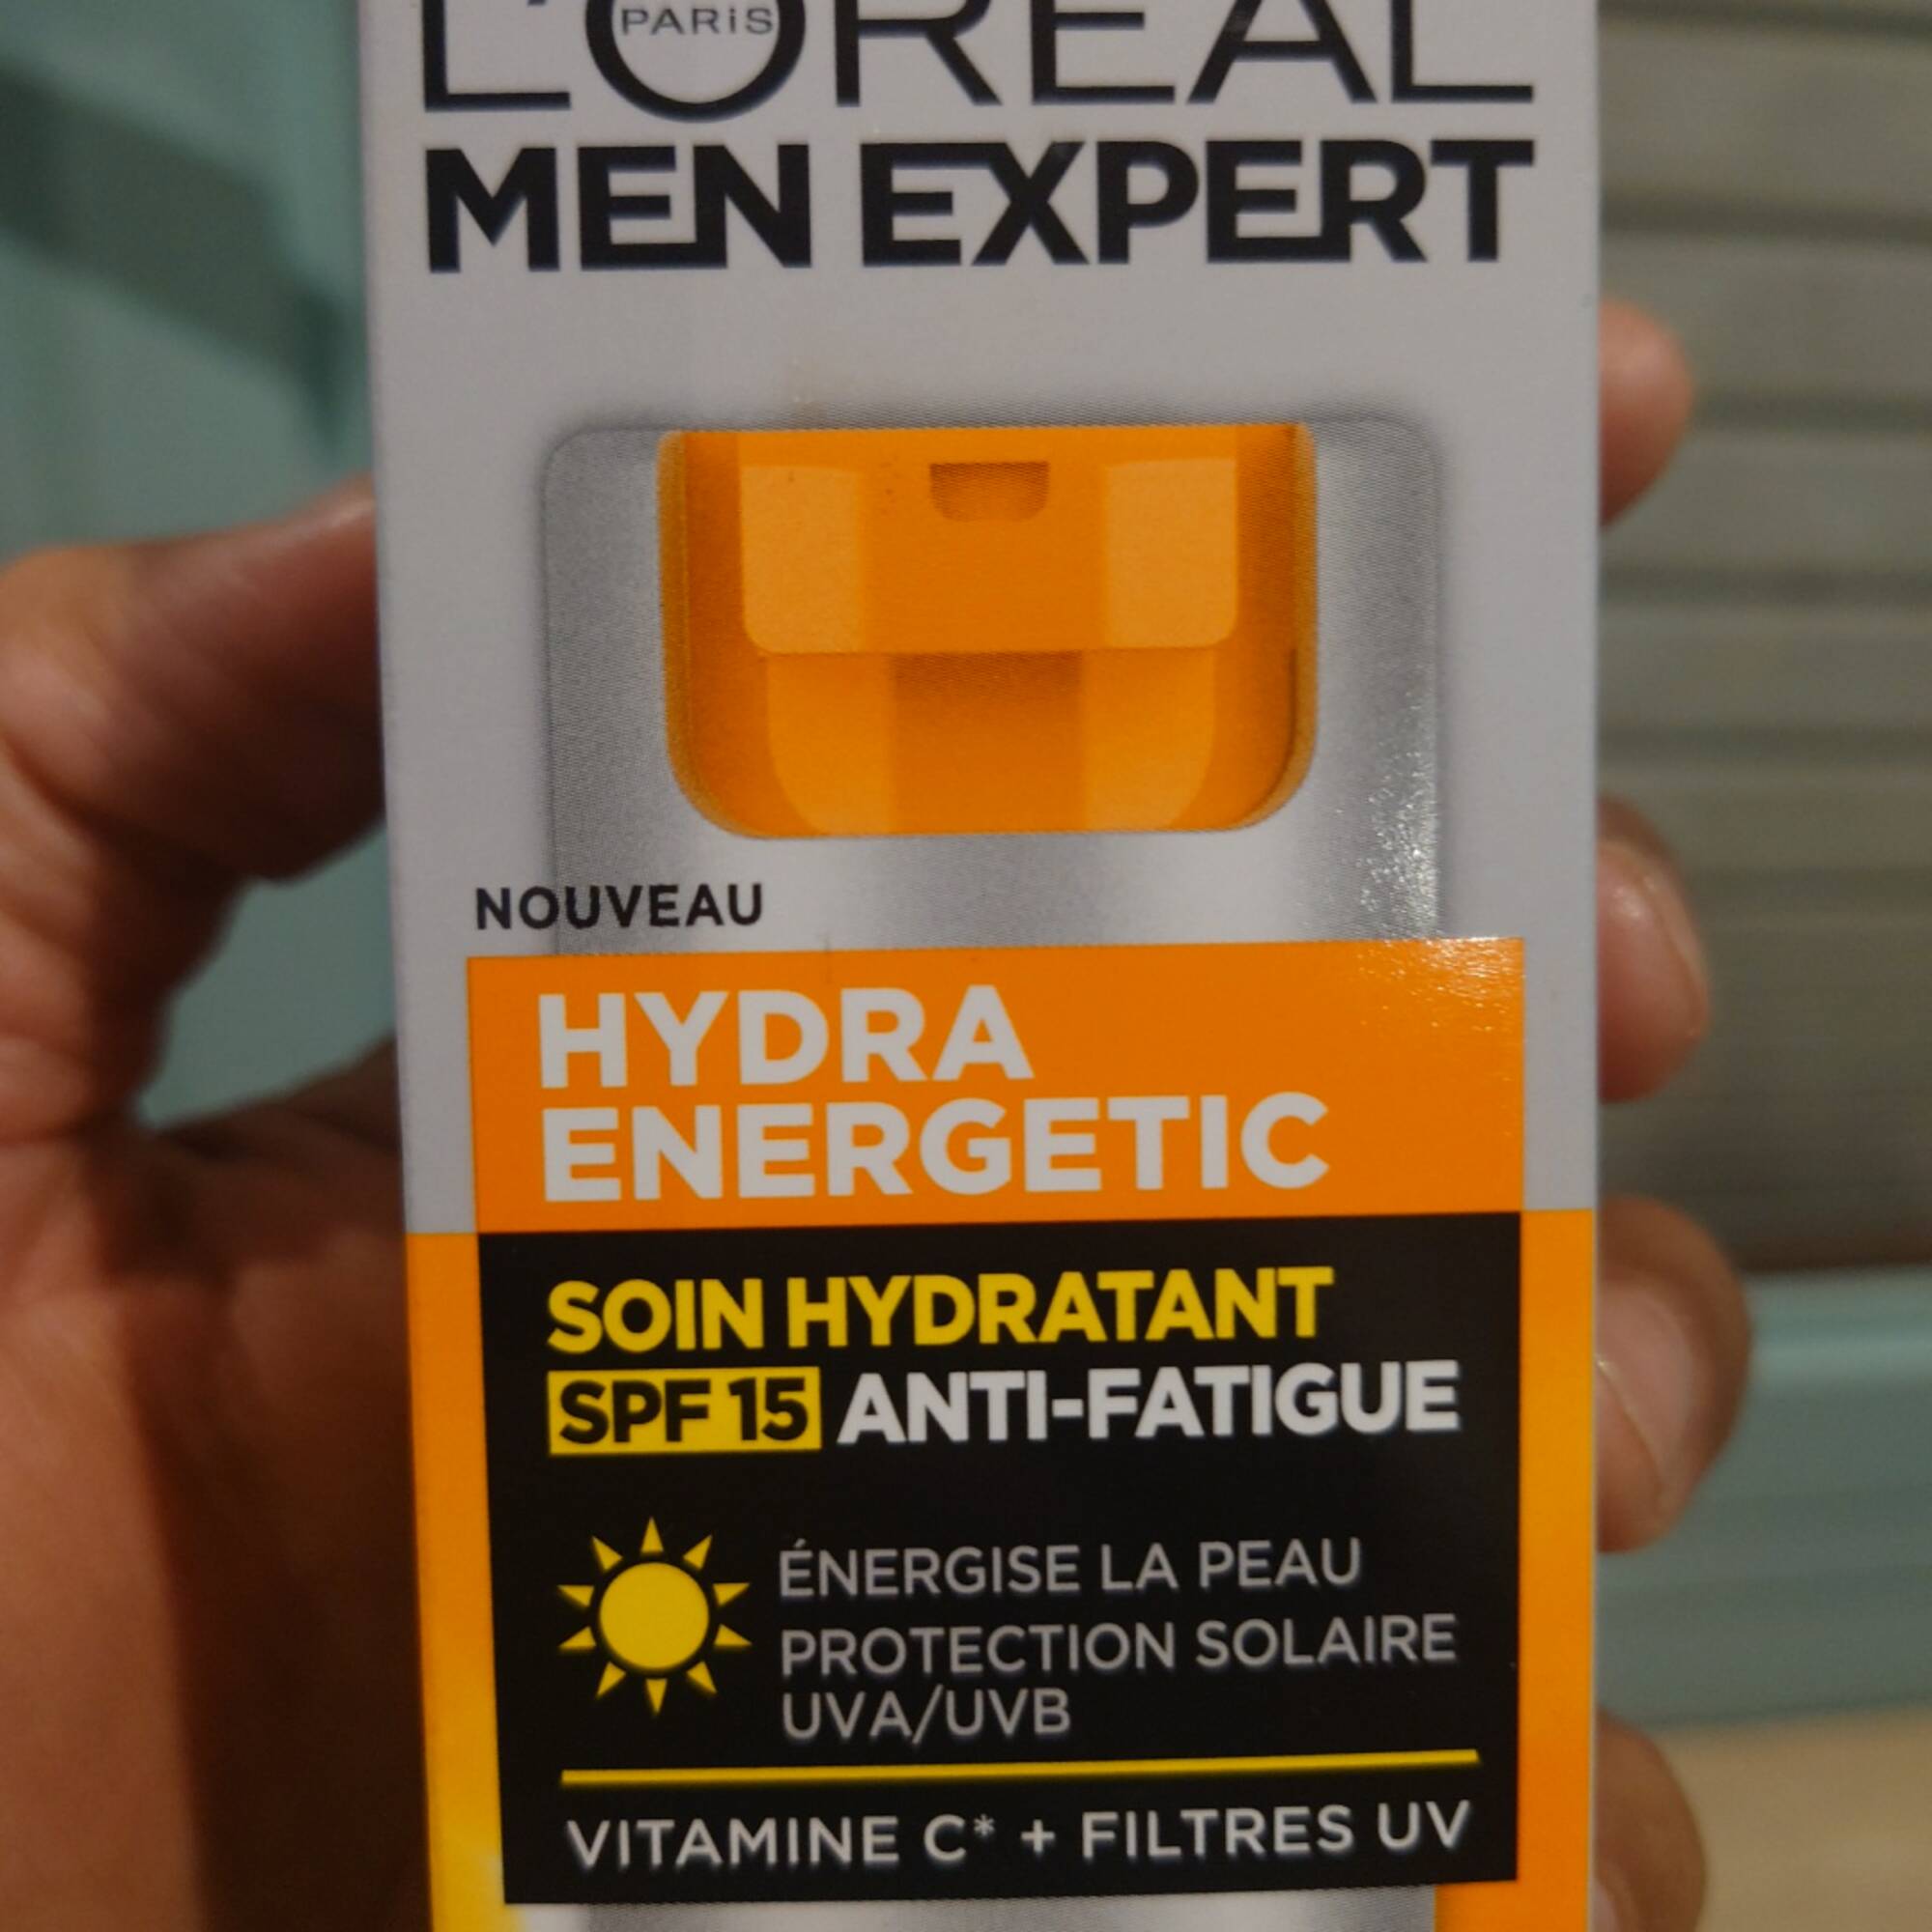 L'ORÉAL PARIS - Men expert Hydra energetic - Soin hydratant SPF 15 anti-fatigue